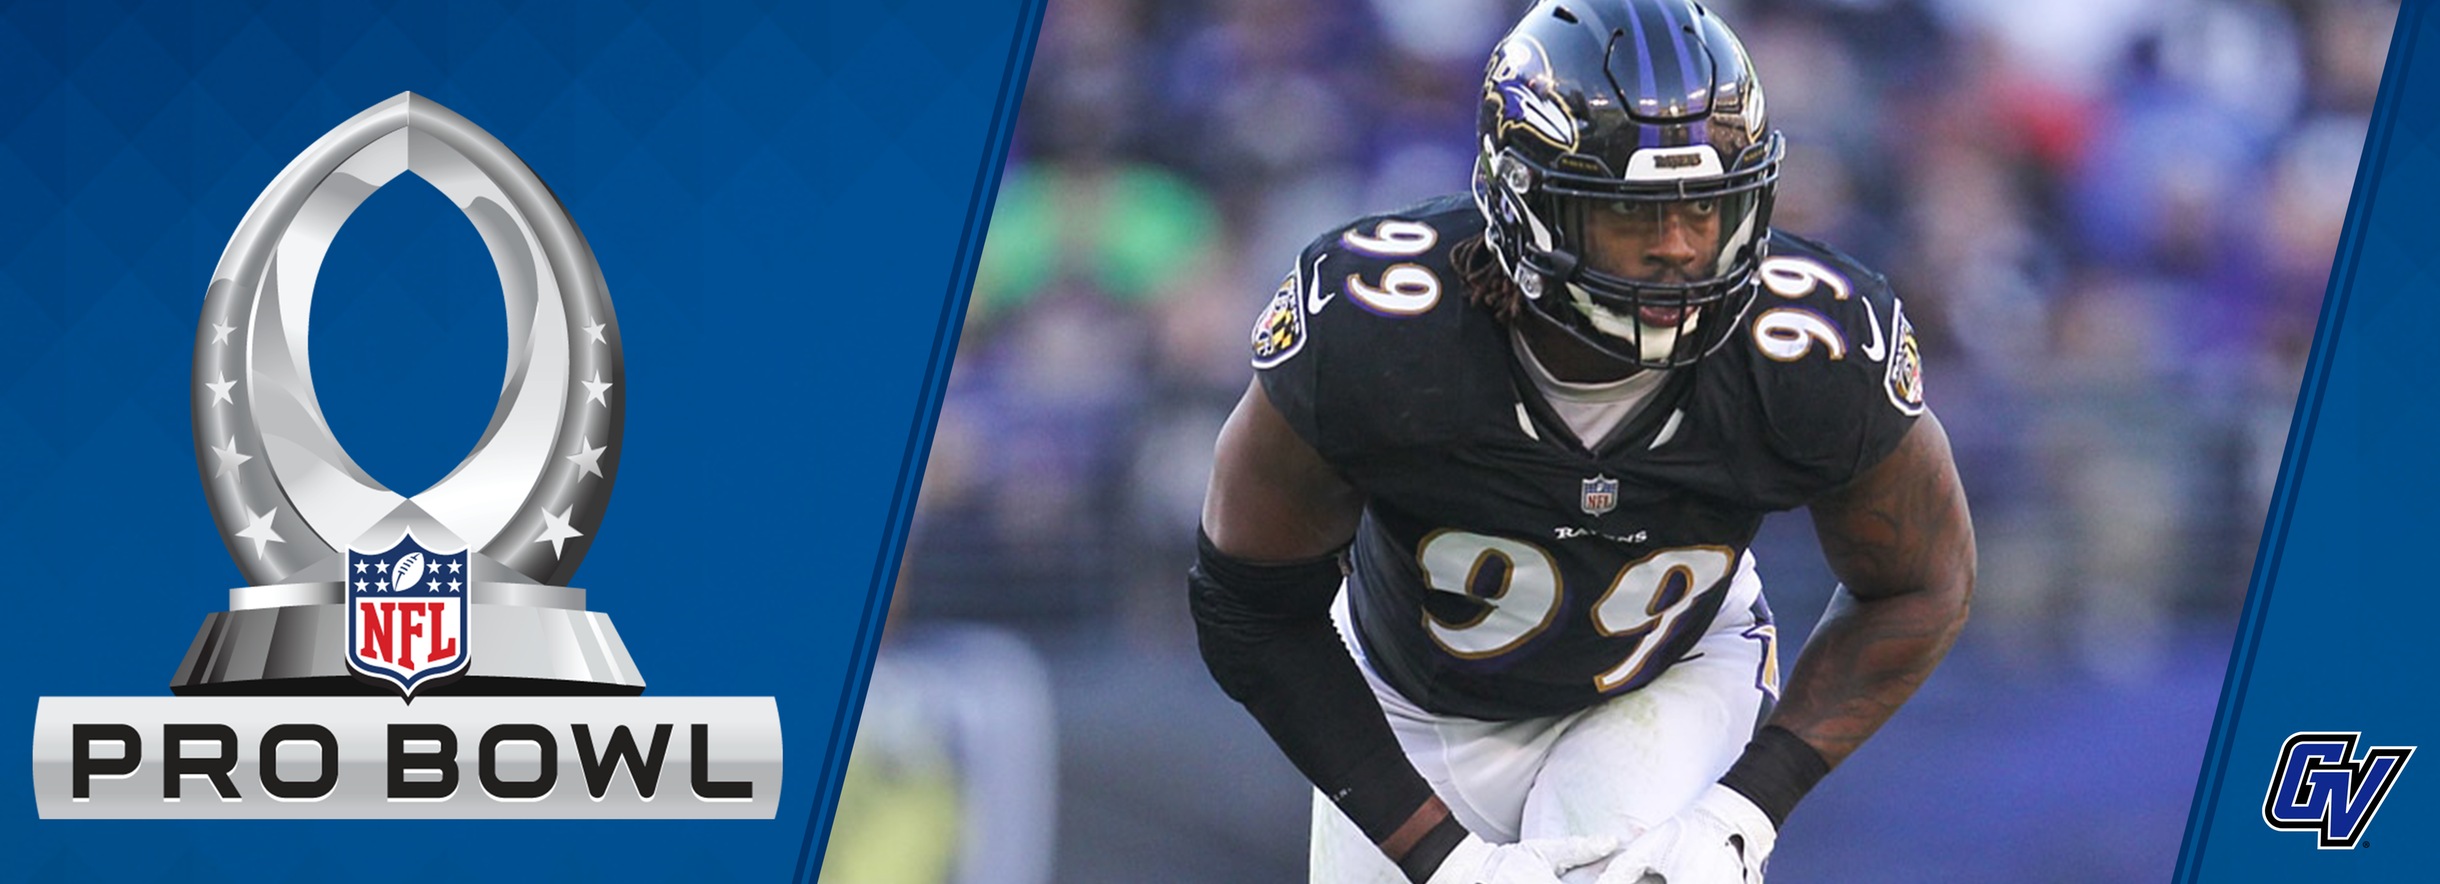 Former GVSU Standout Matt Judon named to NFL Pro Bowl with Baltimore Ravens